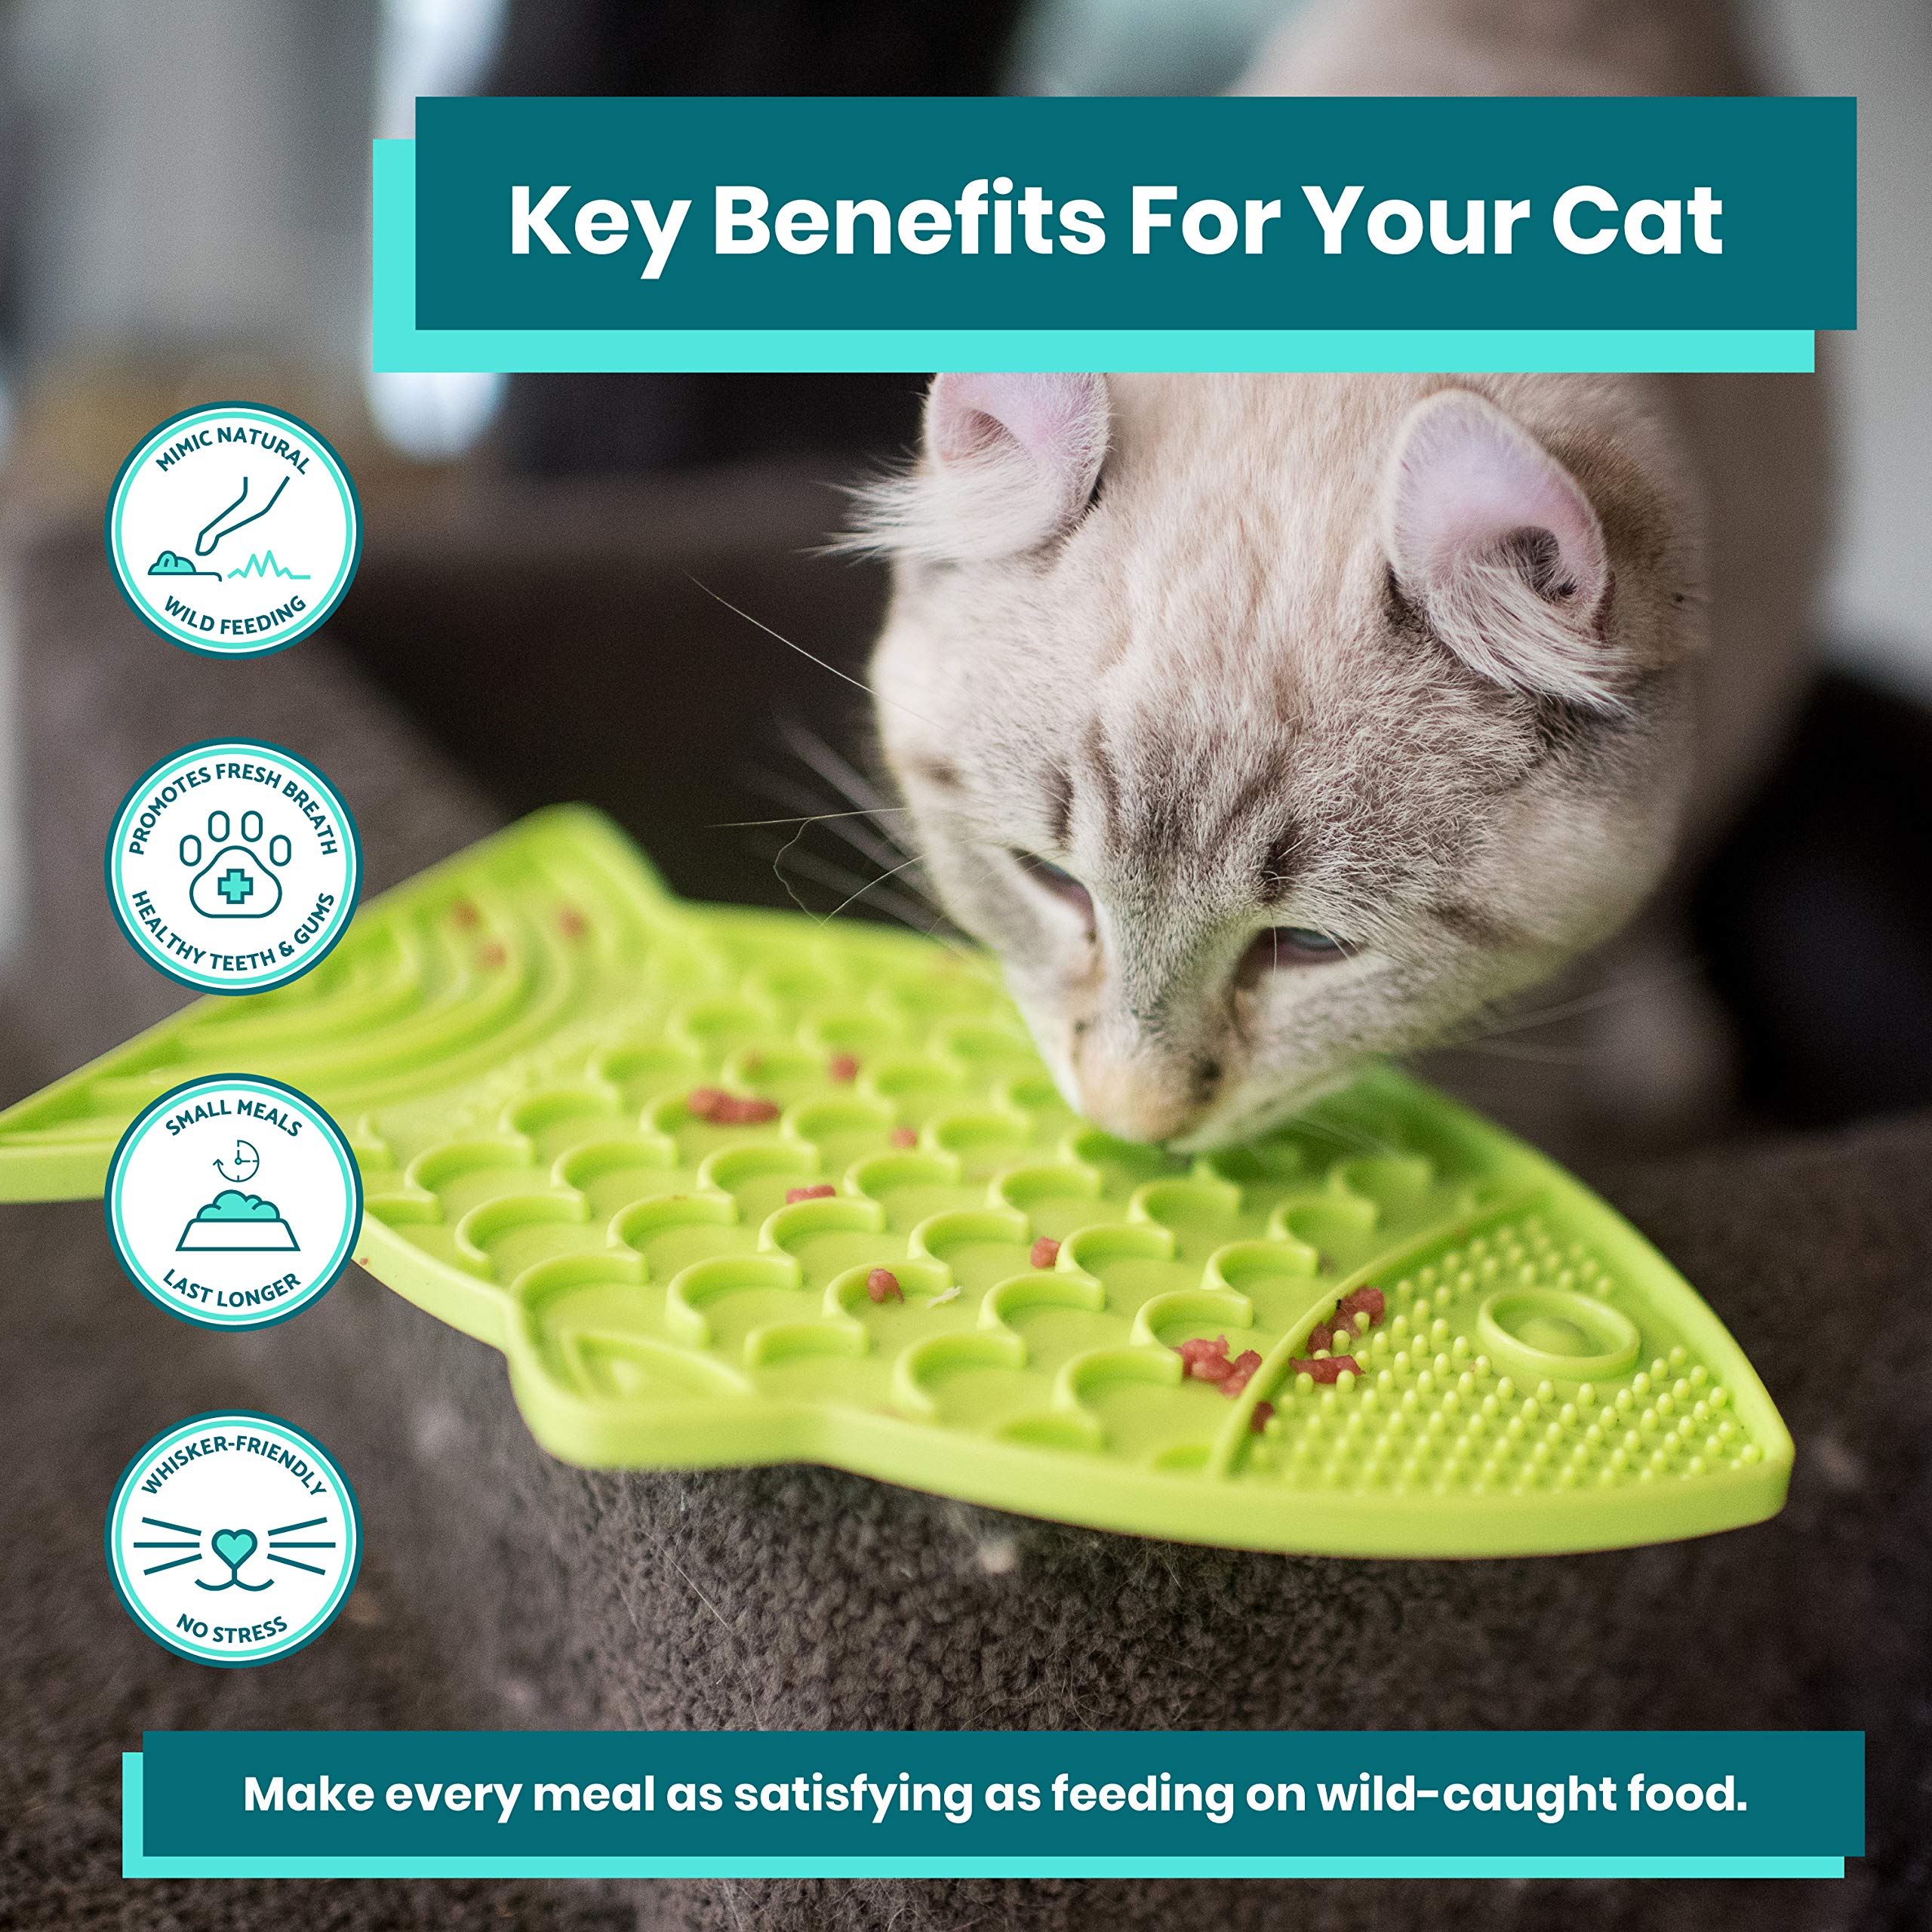 Innovative Pet Lickimat Felix Slow Feeding Mat for Cats - Green  